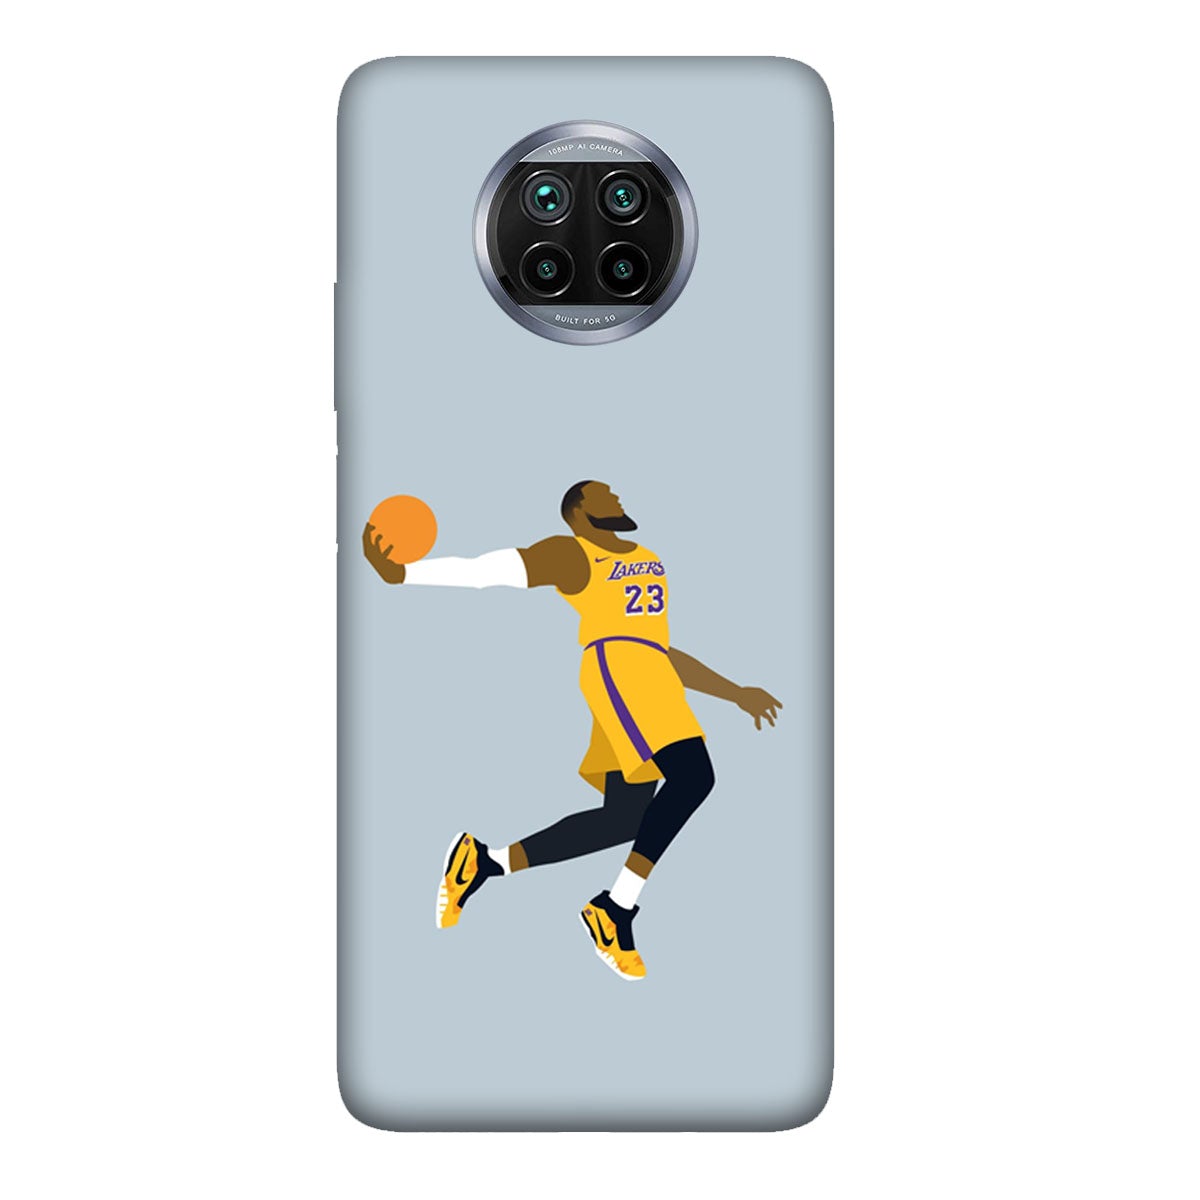 Lebron James - Lakers - NBA - Mobile Phone Cover - Hard Case